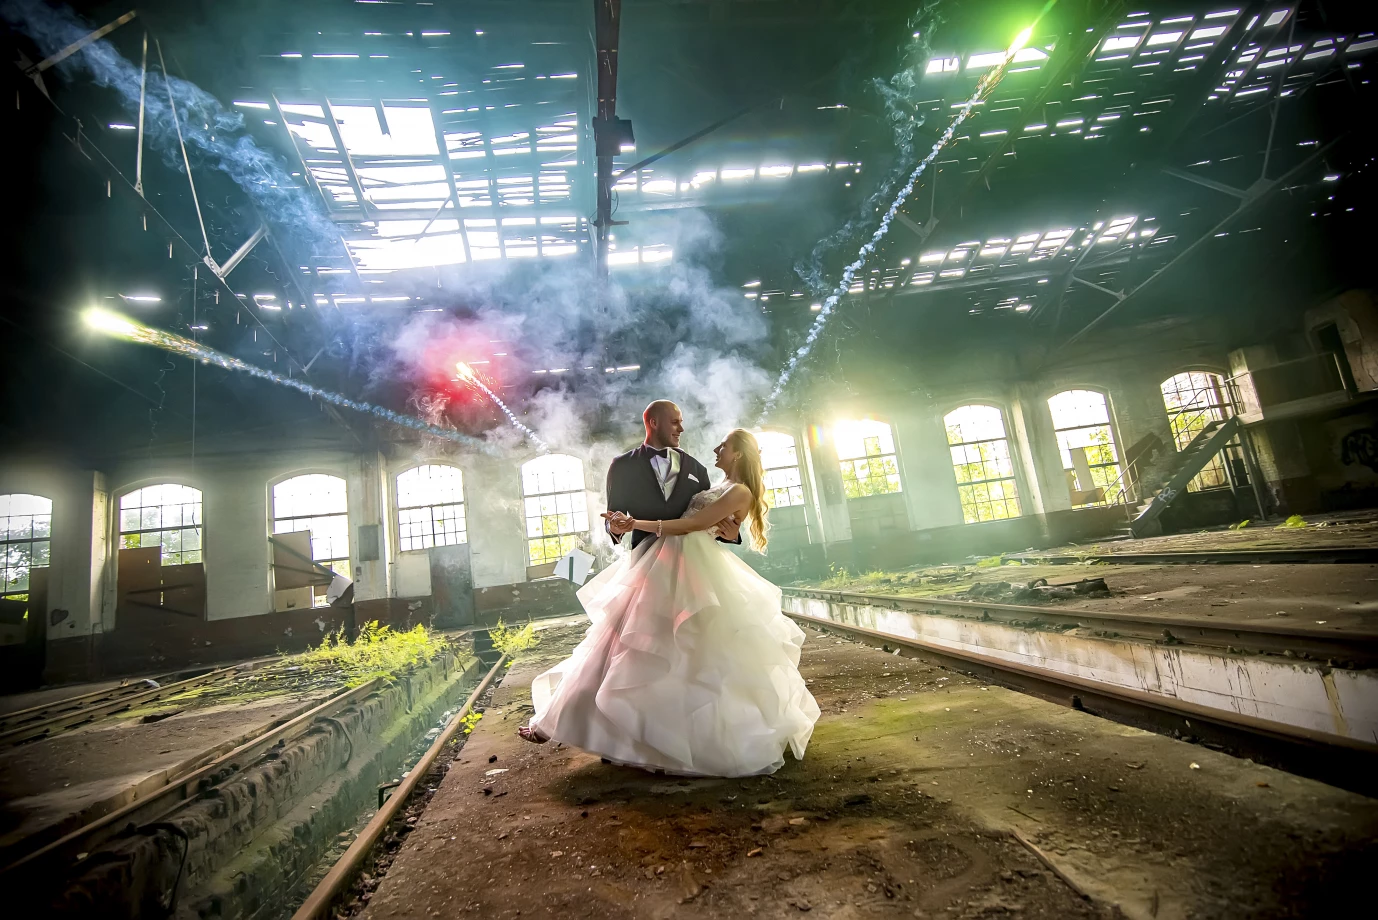 fotograf kluczbork tomasz-michalak-fotografia portfolio zdjecia slubne inspiracje wesele plener slubny sesja slubna